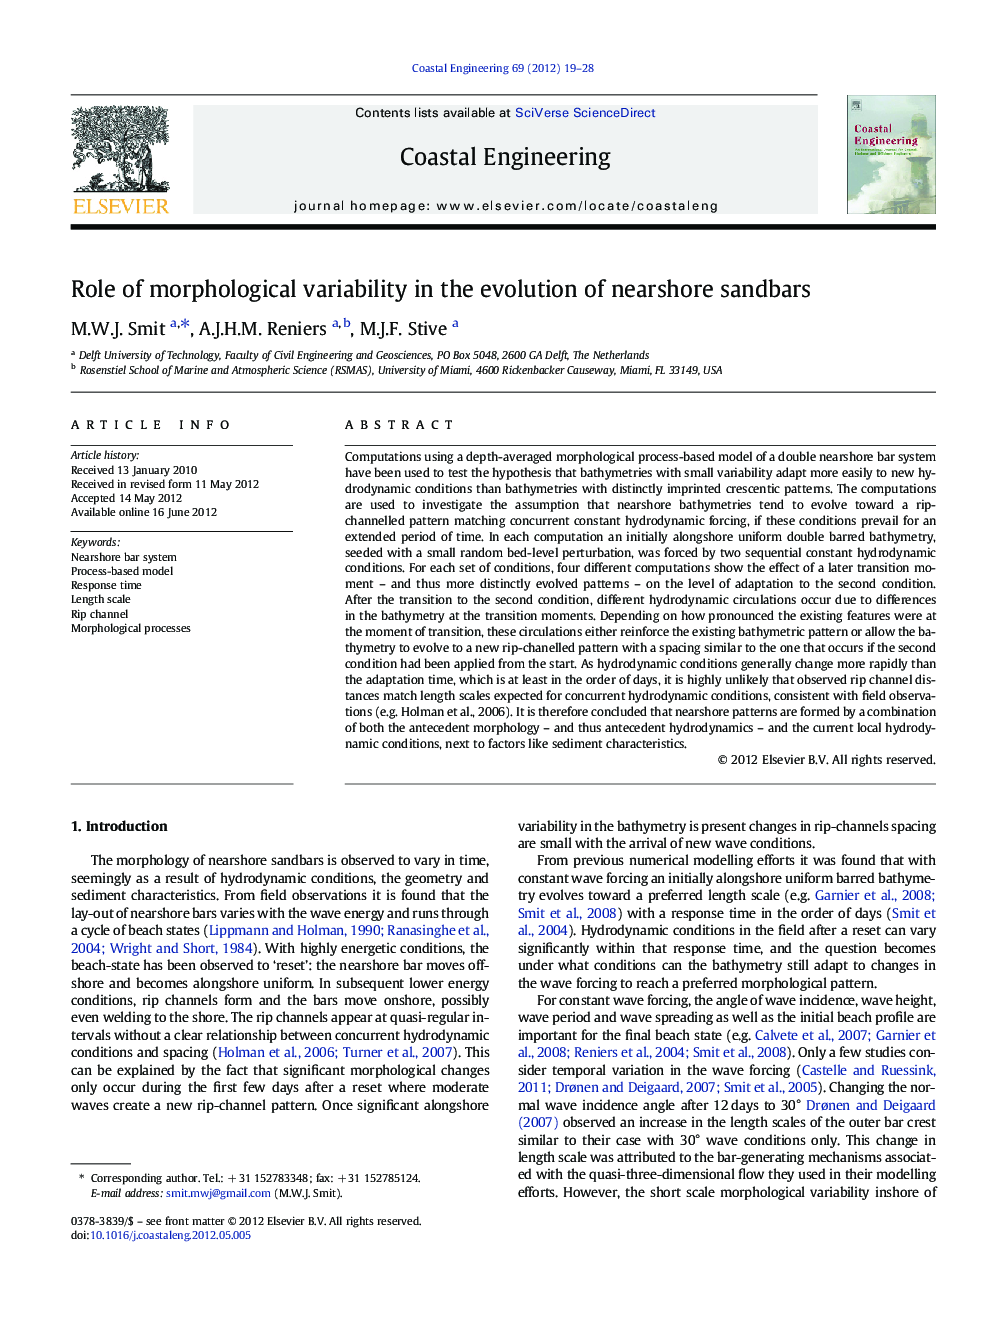 Role of morphological variability in the evolution of nearshore sandbars